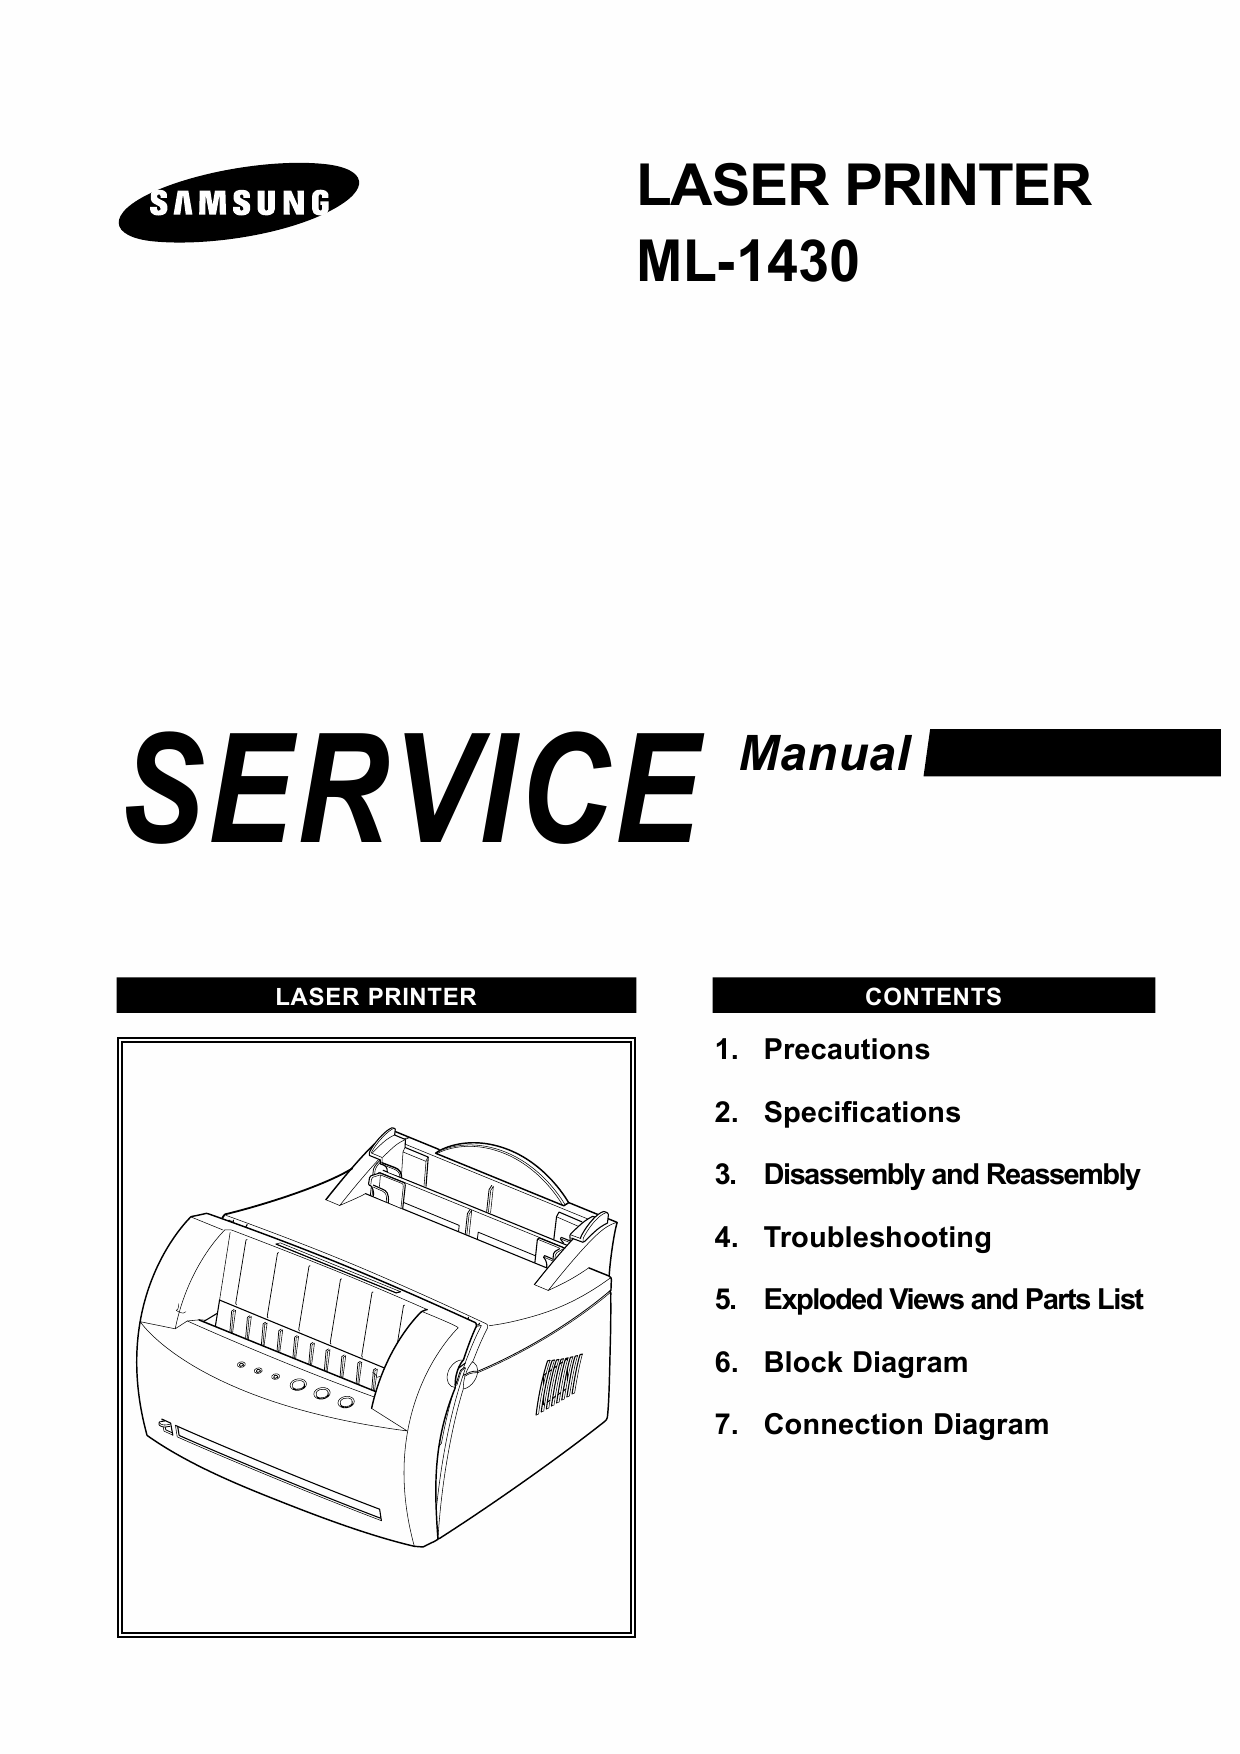 Samsung Laser-Printer ML-1430 Parts and Service Manual-1